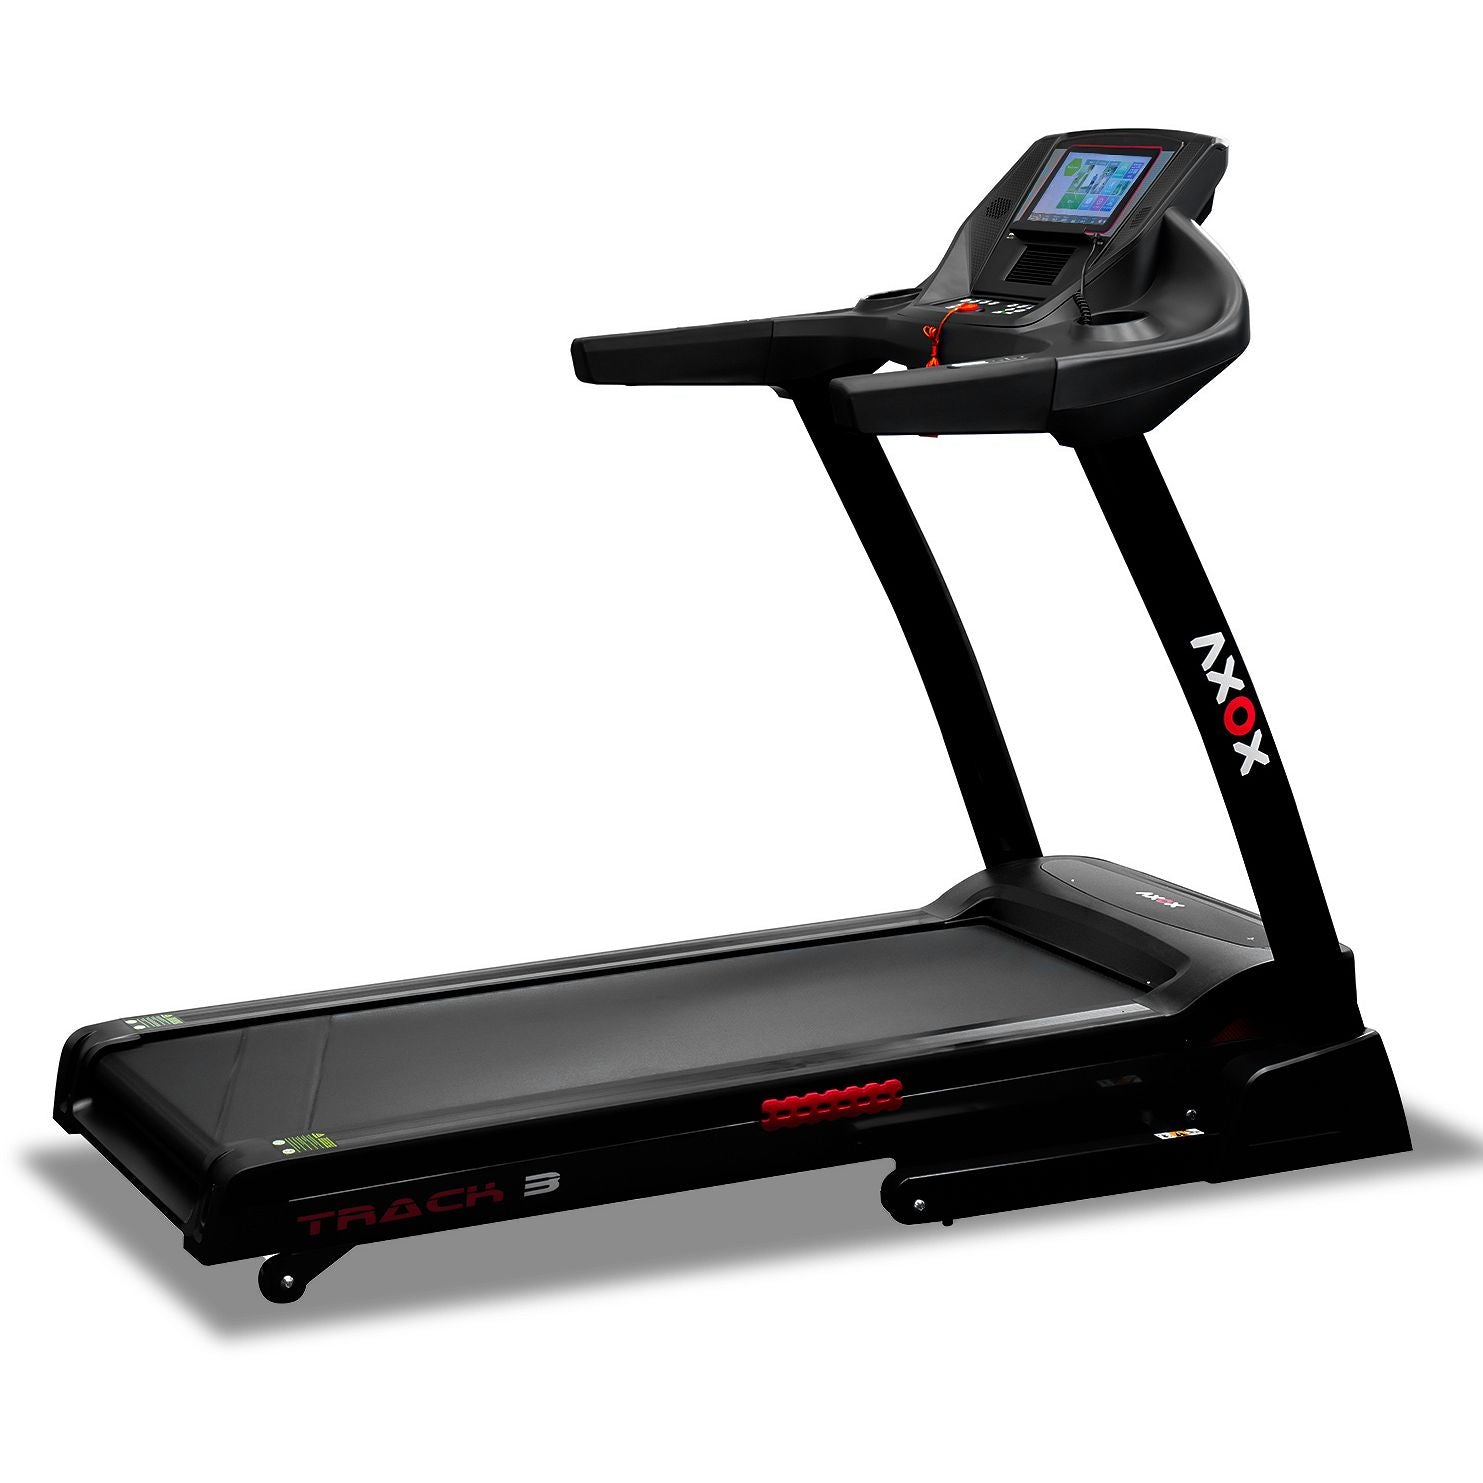 Axox Fitness Track 3 Treadmill with Smart Display